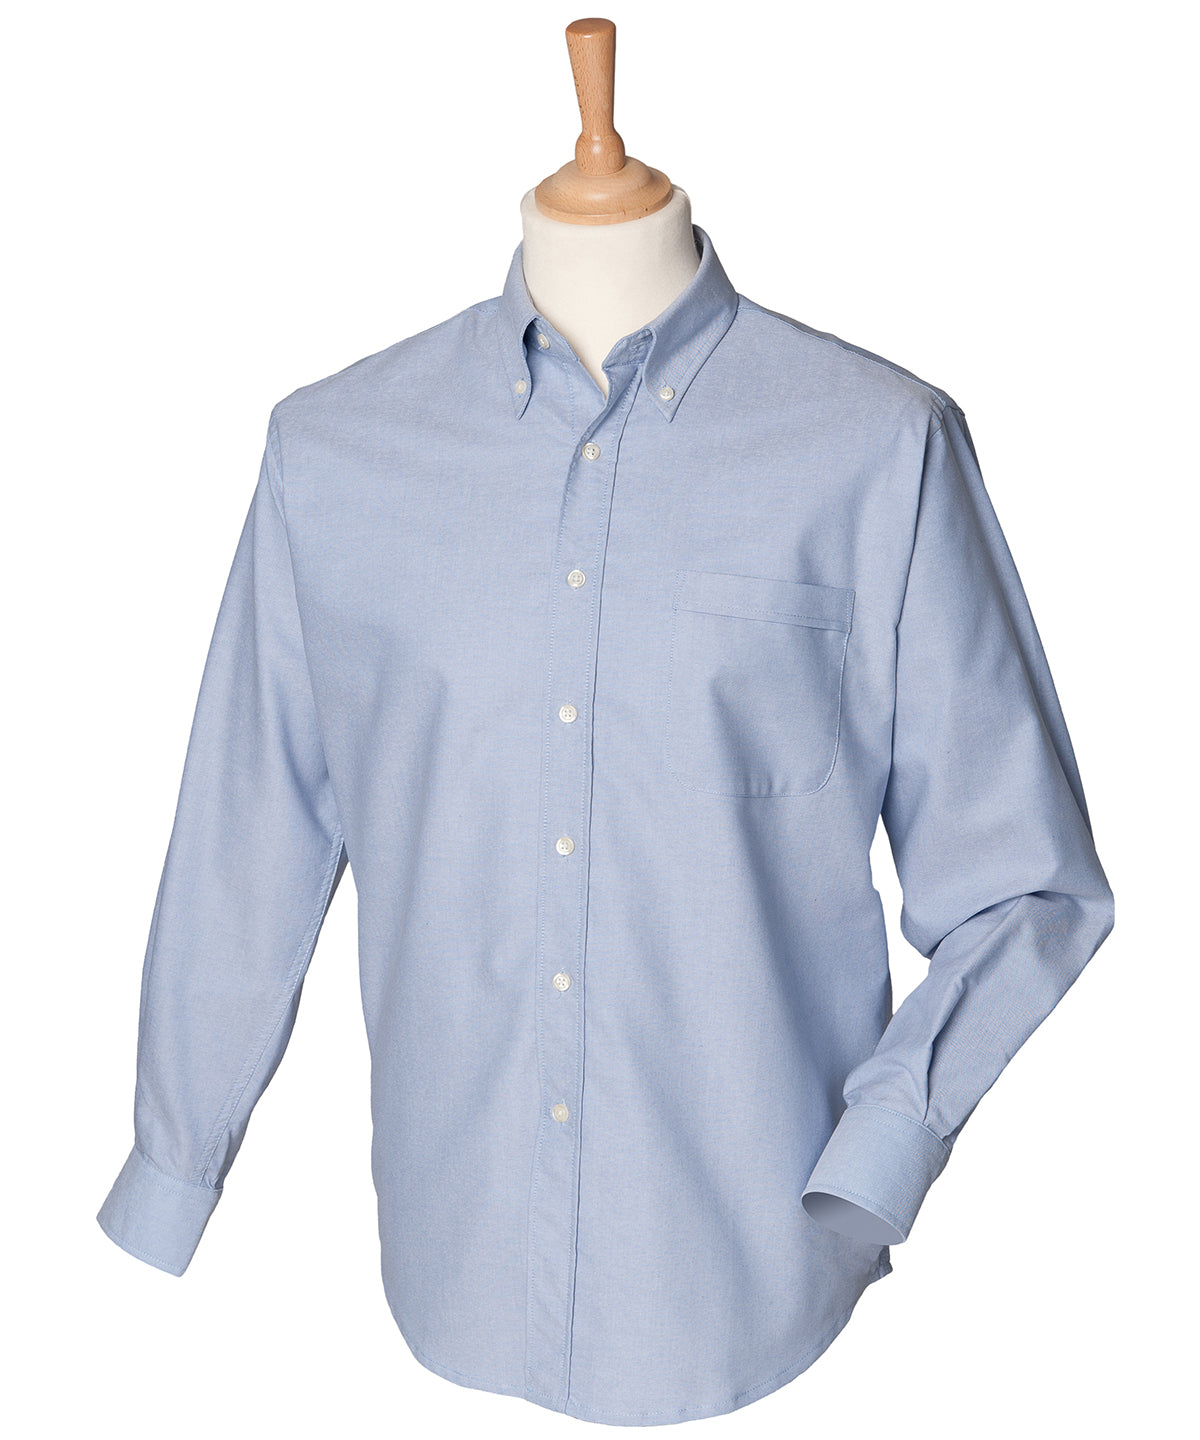 Bolir - Long Sleeve Classic Oxford Shirt